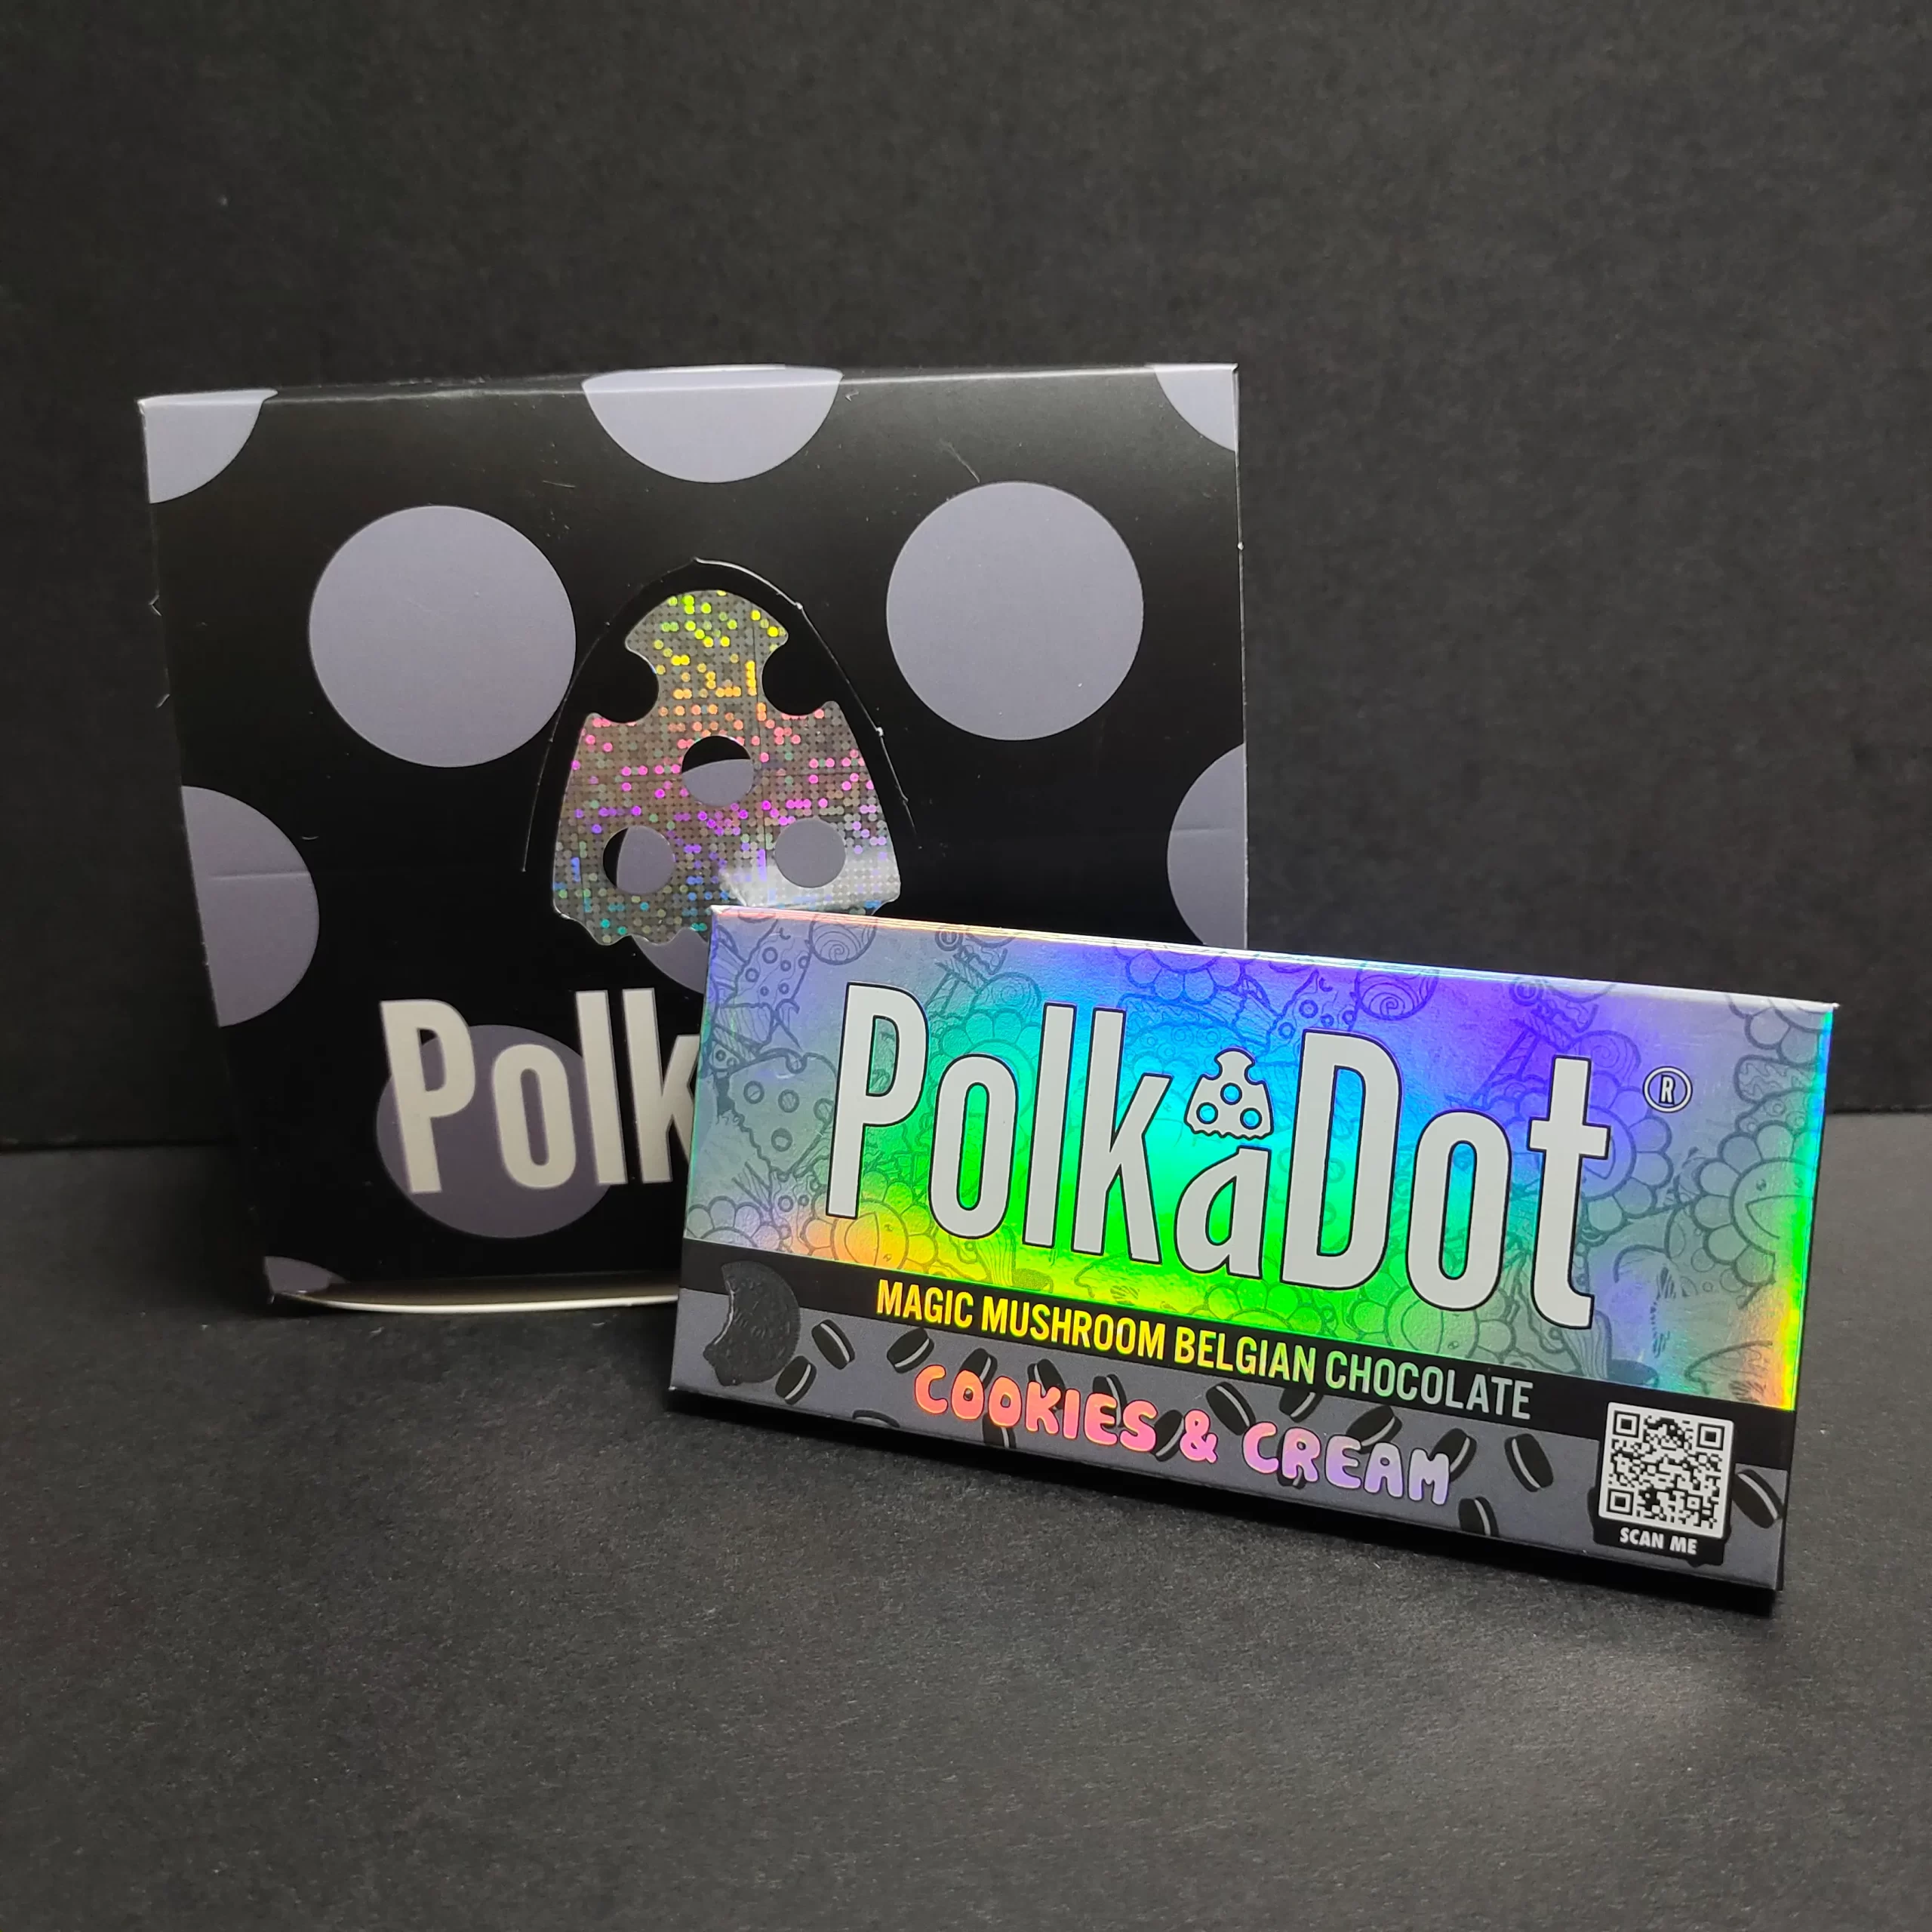 Official Polka Dot Chocolate Shop - Magic in polkadot shroom bars